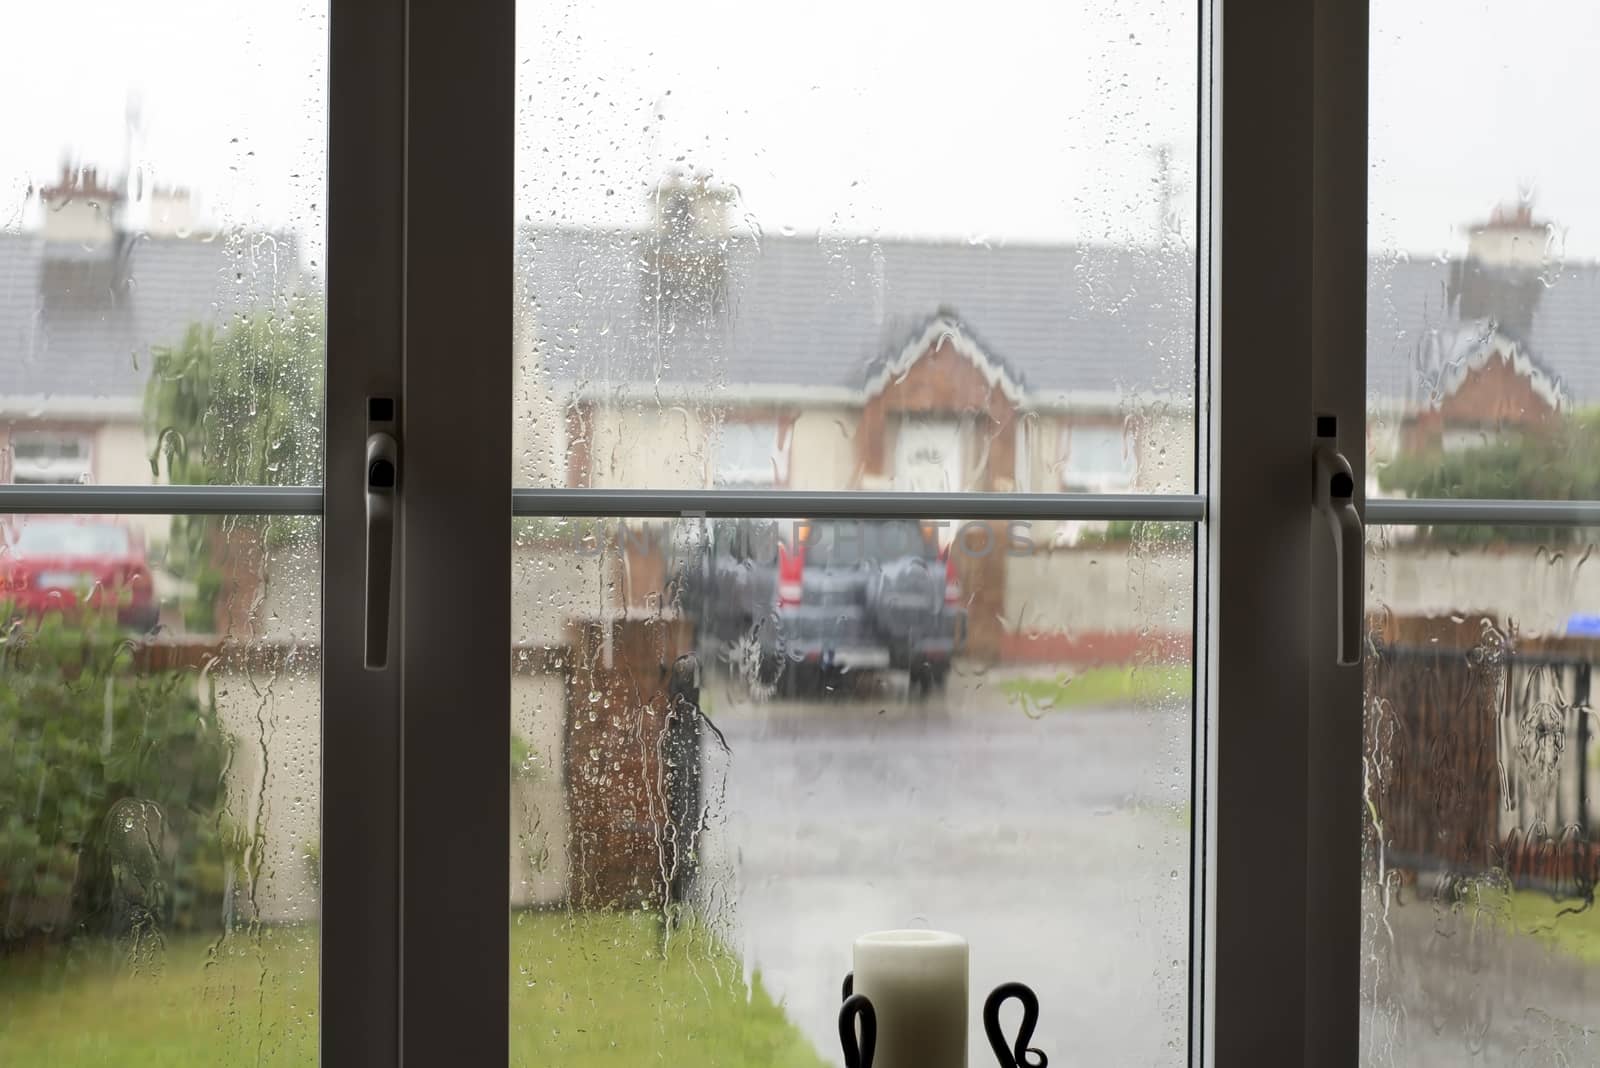 raining on the window by morrbyte